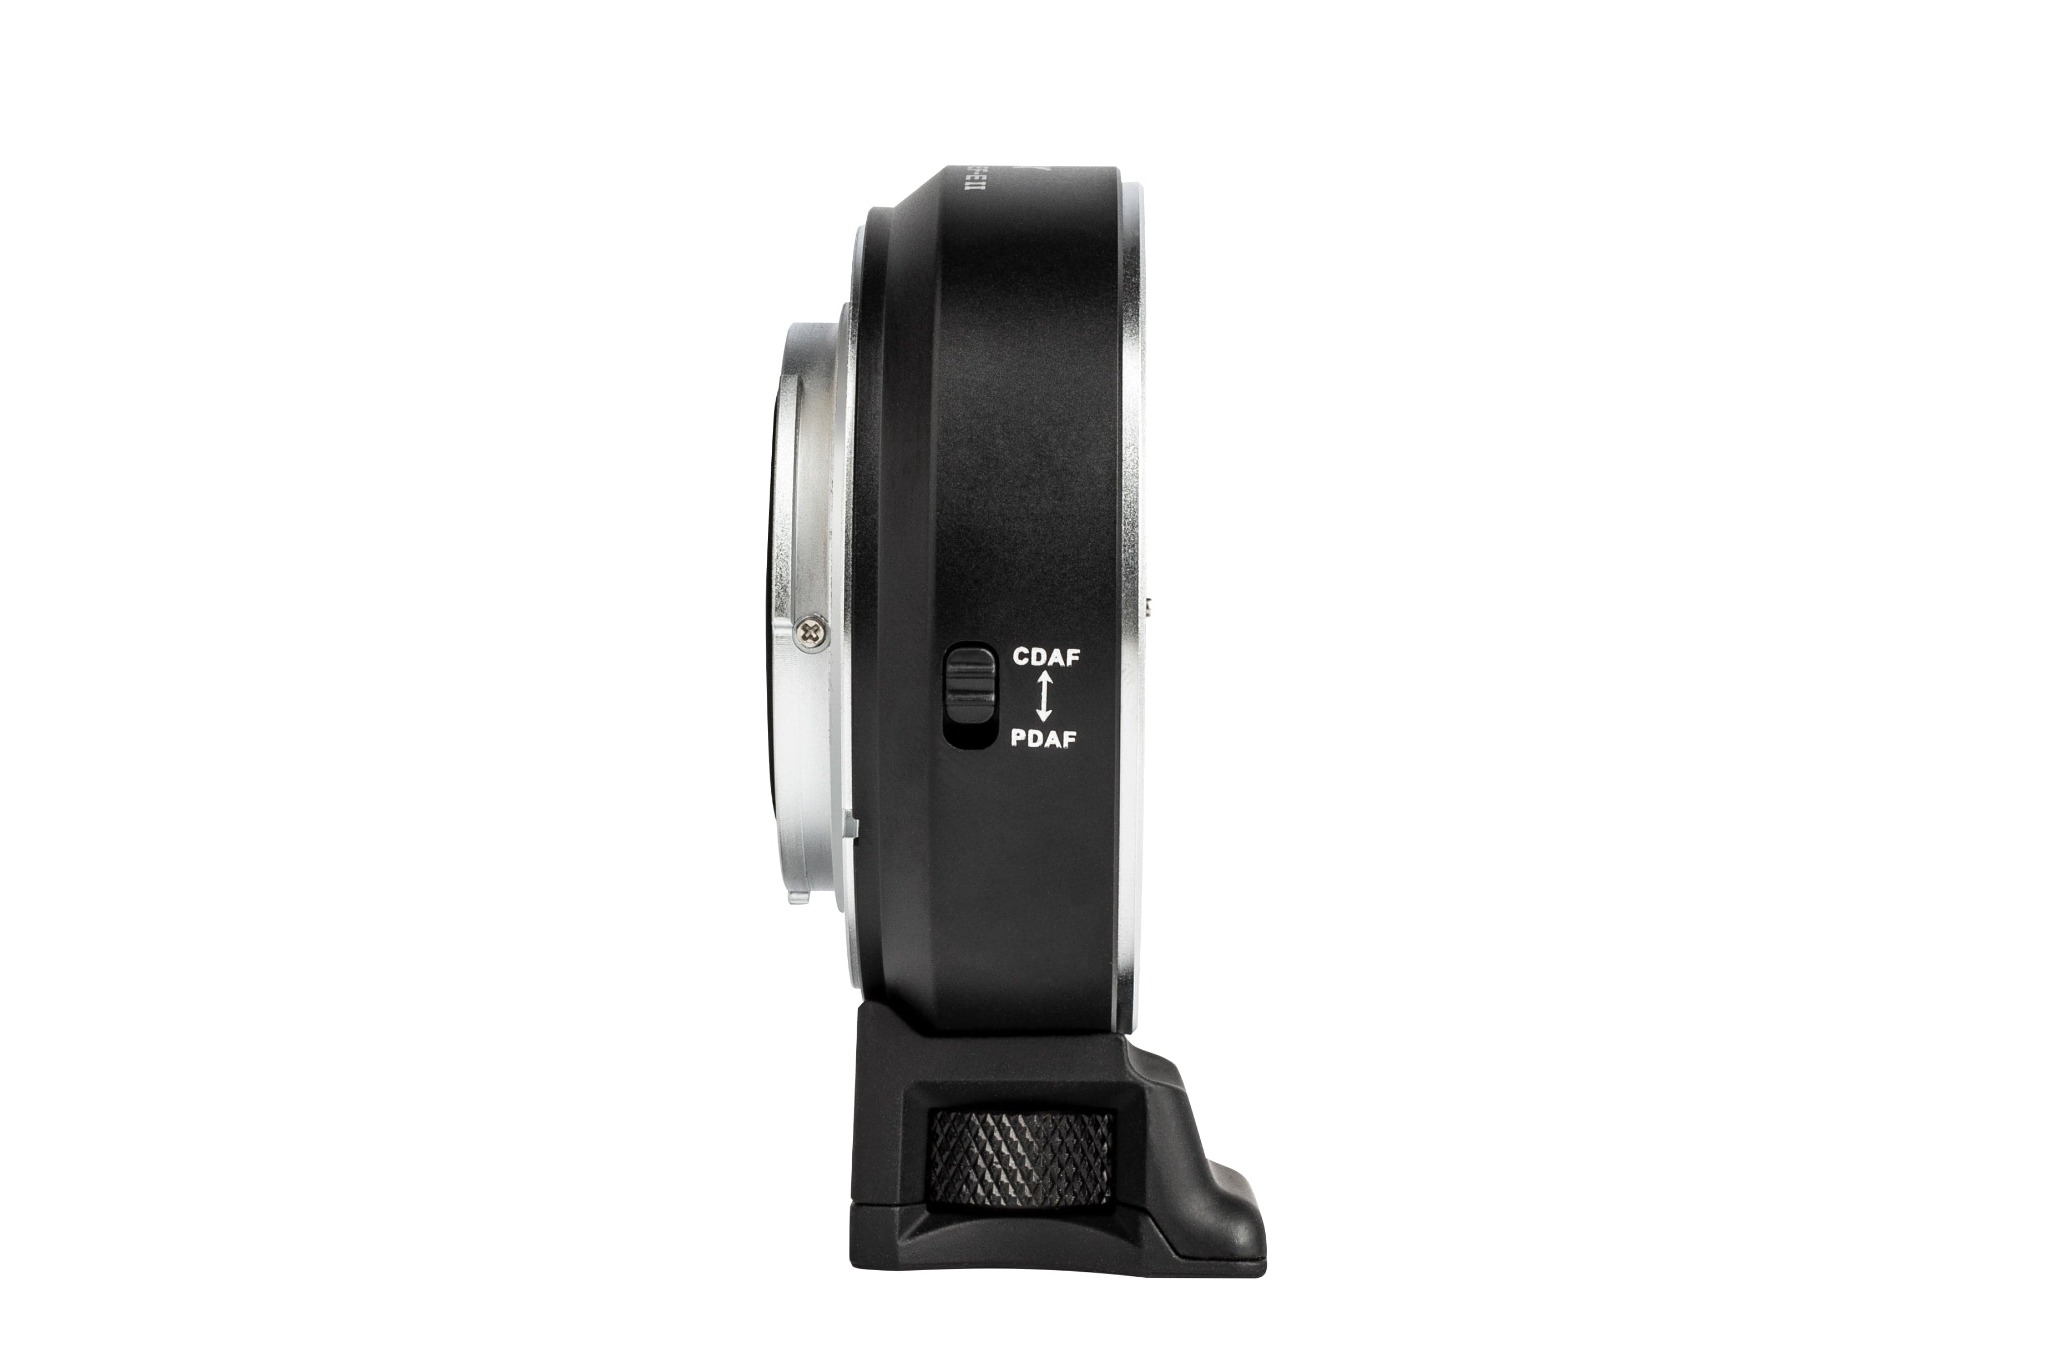 VILTROX EF-E II Lens Adapter for Canon EF Lens to Sony E-Mount